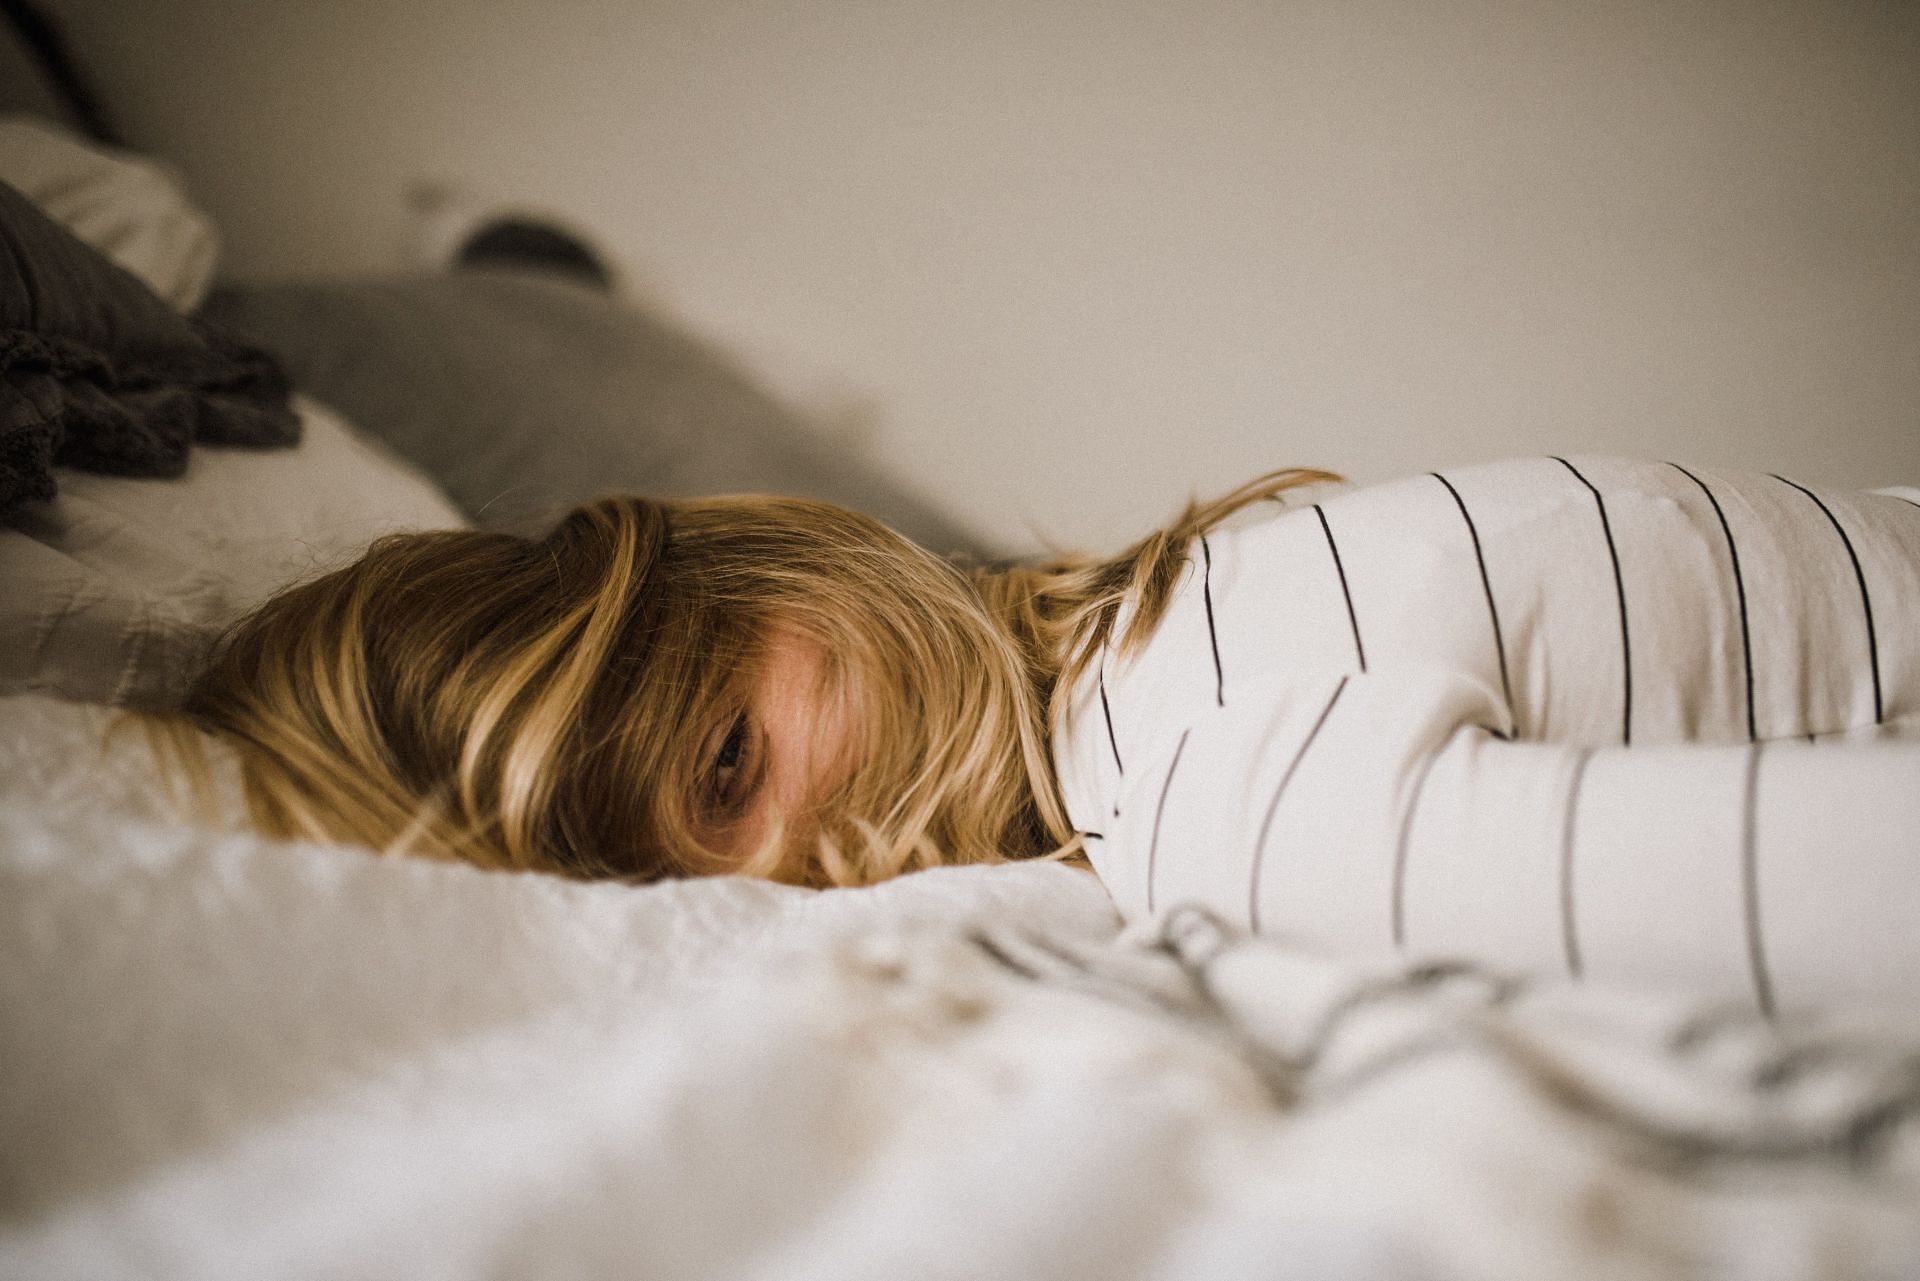 Sleeping on your side can help reduce snoring. (Image via Unsplash/Kinga Howard)